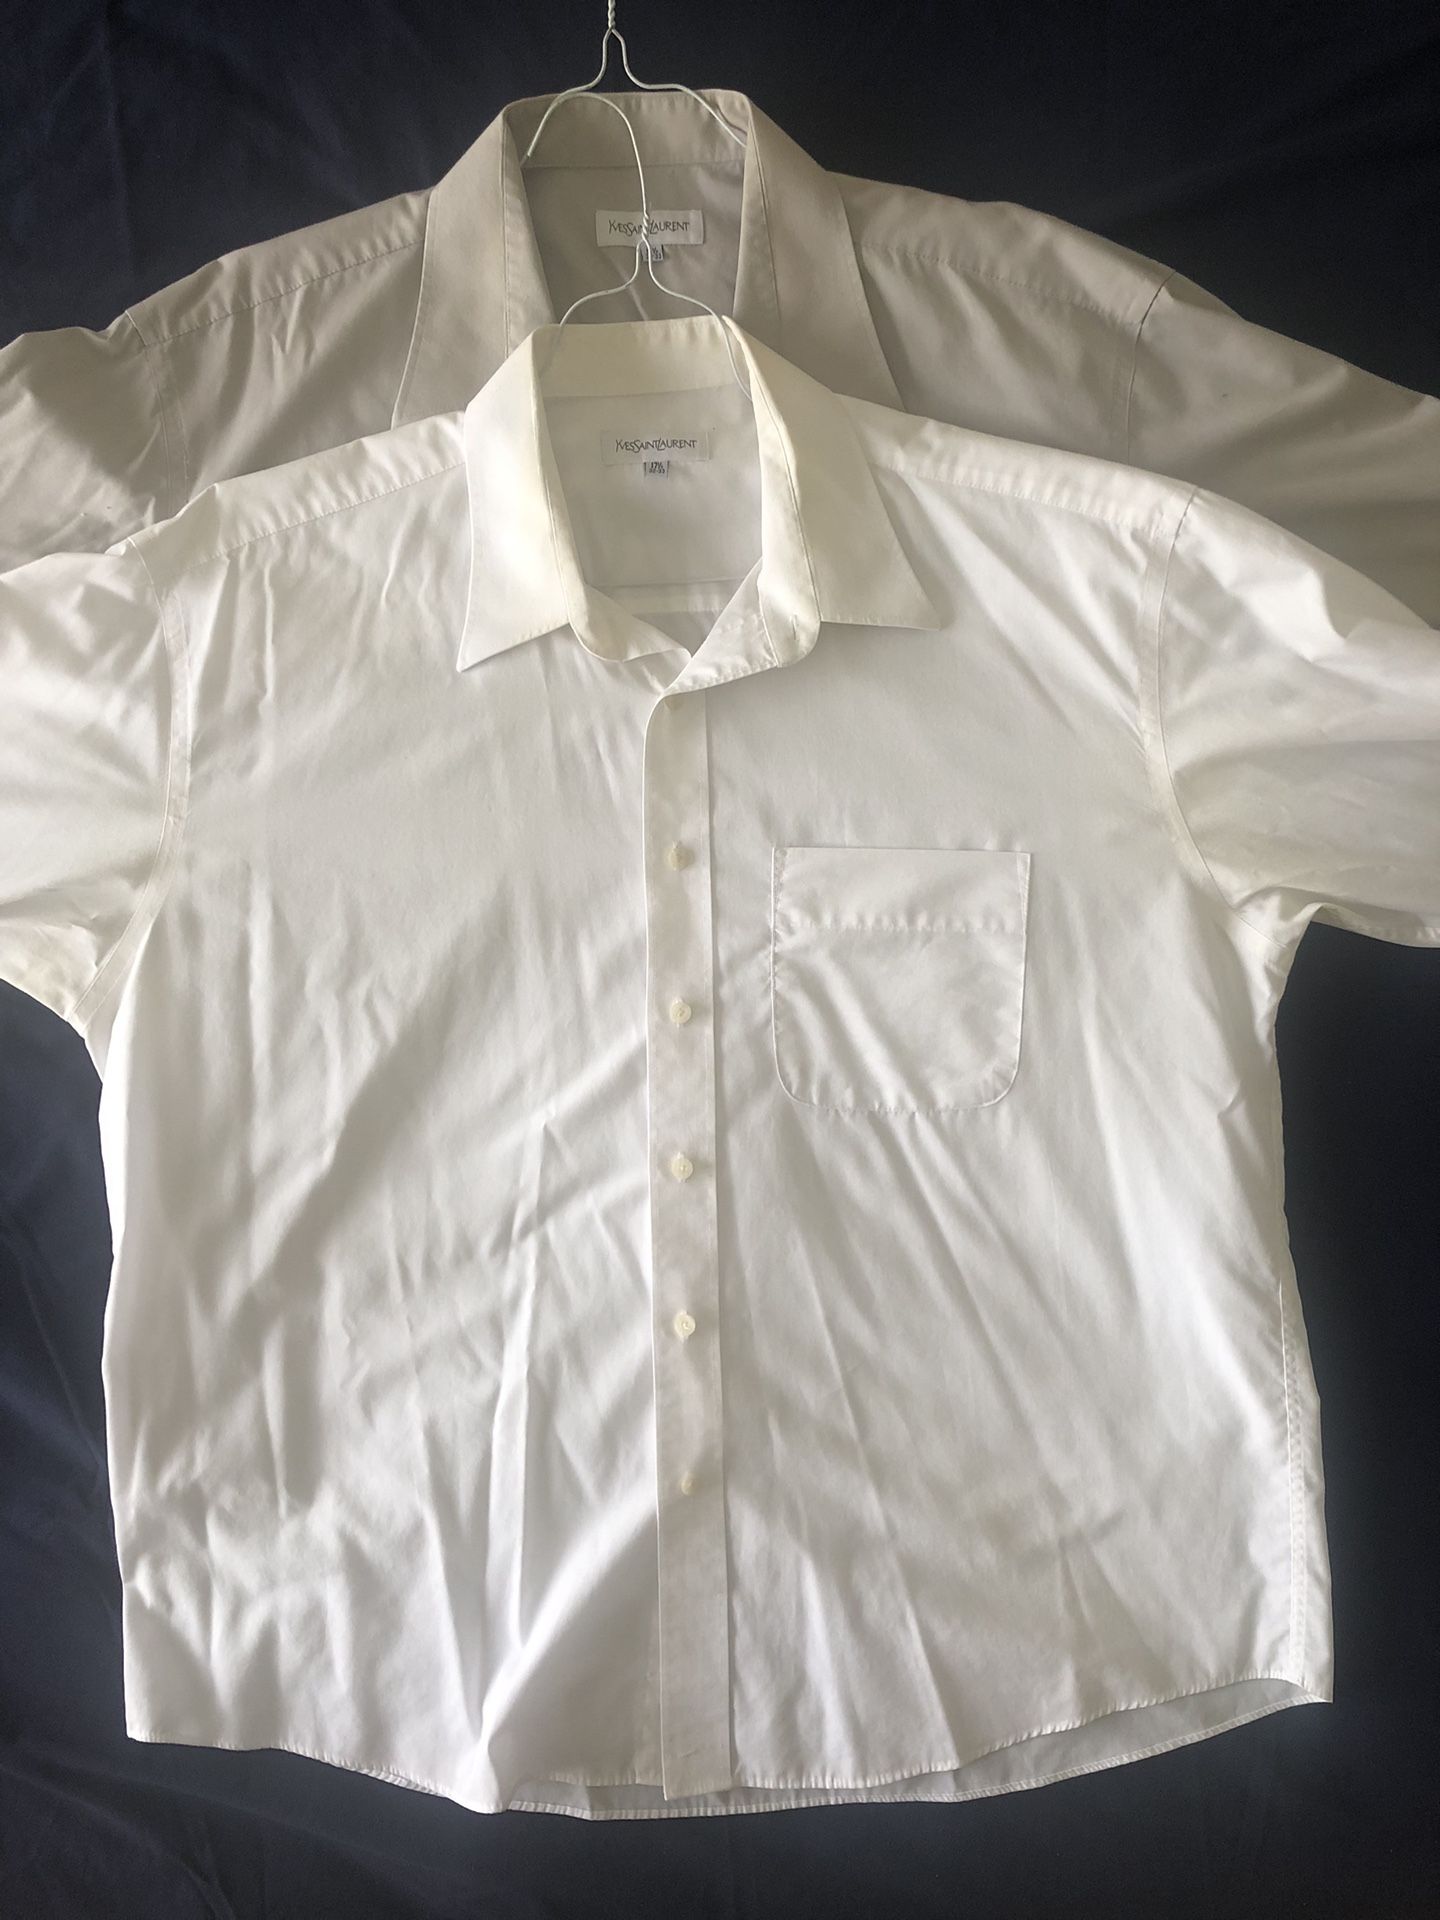 Lot 2 YSL Yves Saint Laurent Mens Dress Shirt Vintage Size: Large (17.5, 32- 33)